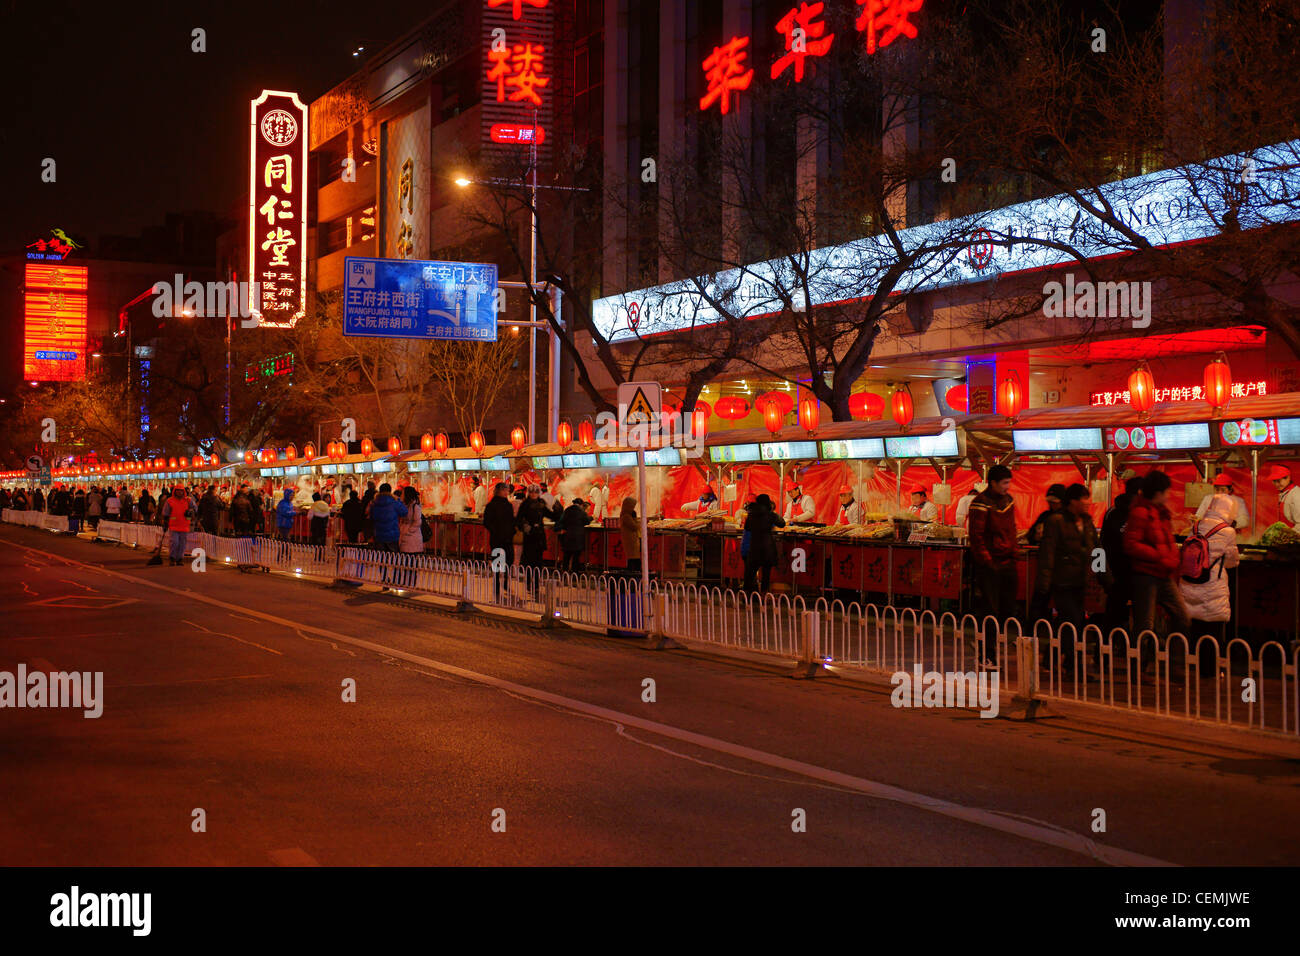 Food stalls at the Donghuamen Night Market, Beijing China Stock Photo